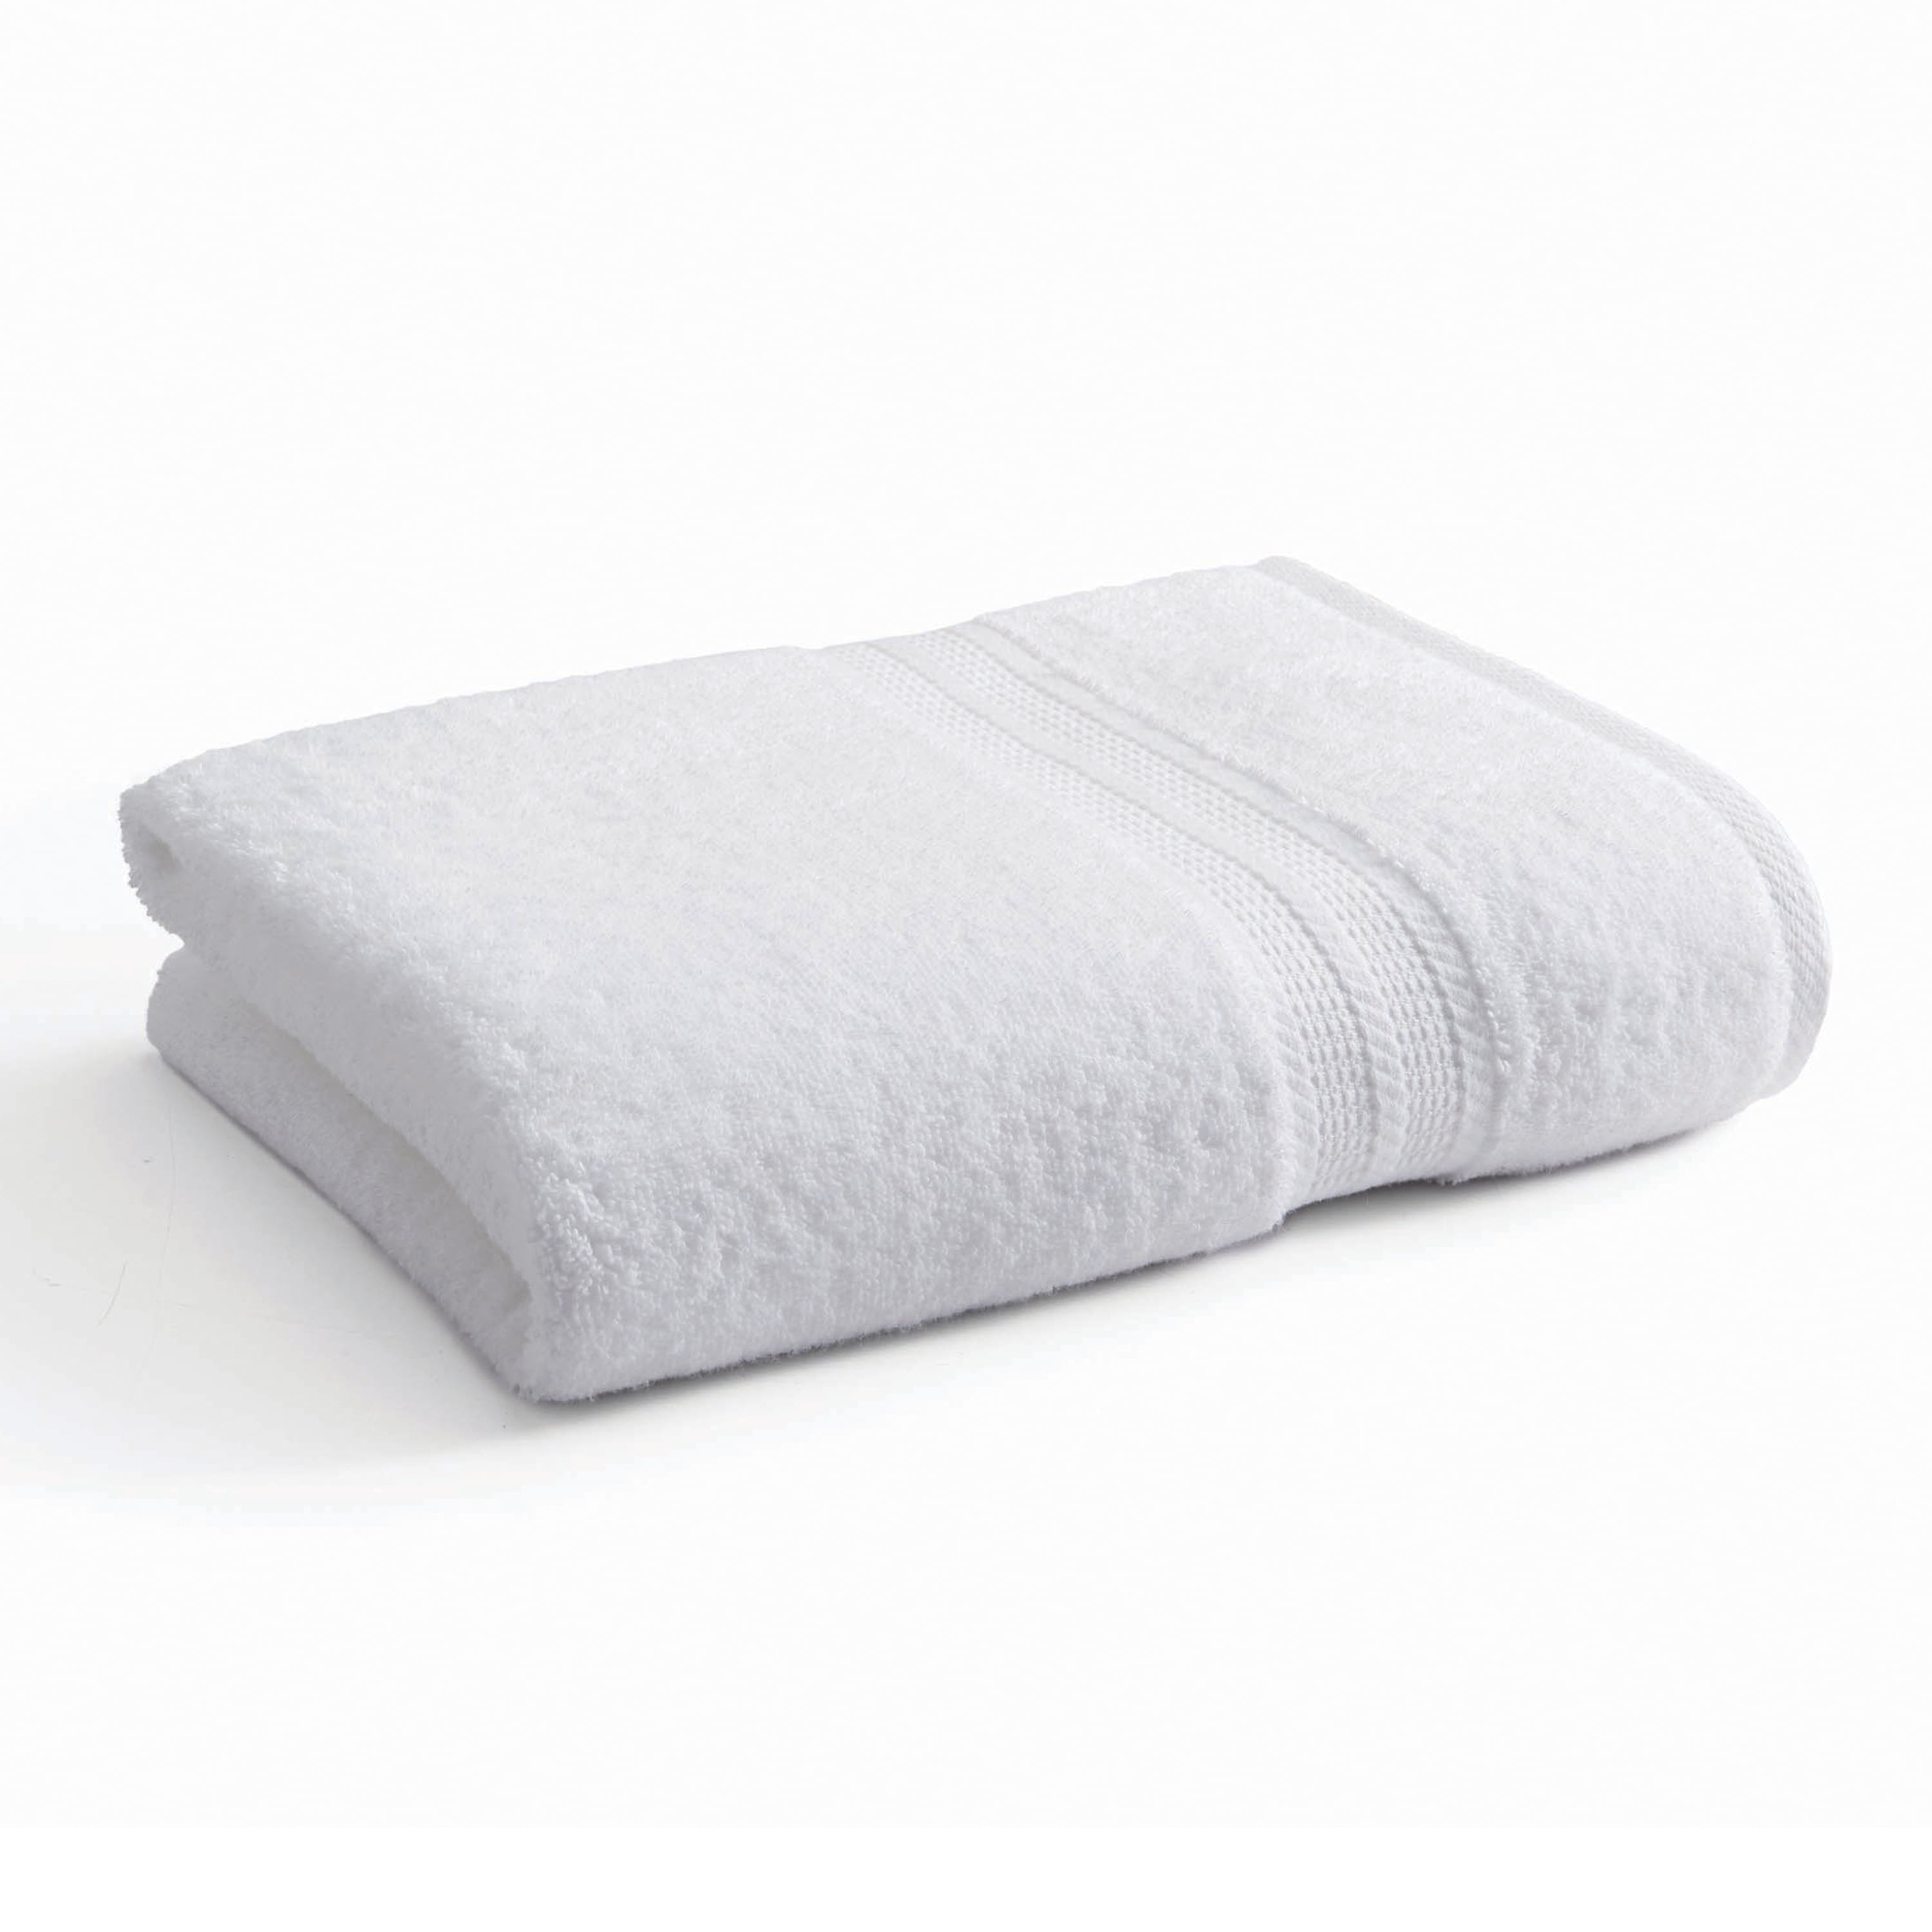 HOTEL QUALITY LARGE SIZE Bath Sheet WILSFORD 1, 2, 3, 4PK Set Soft 500 GSM  Towel